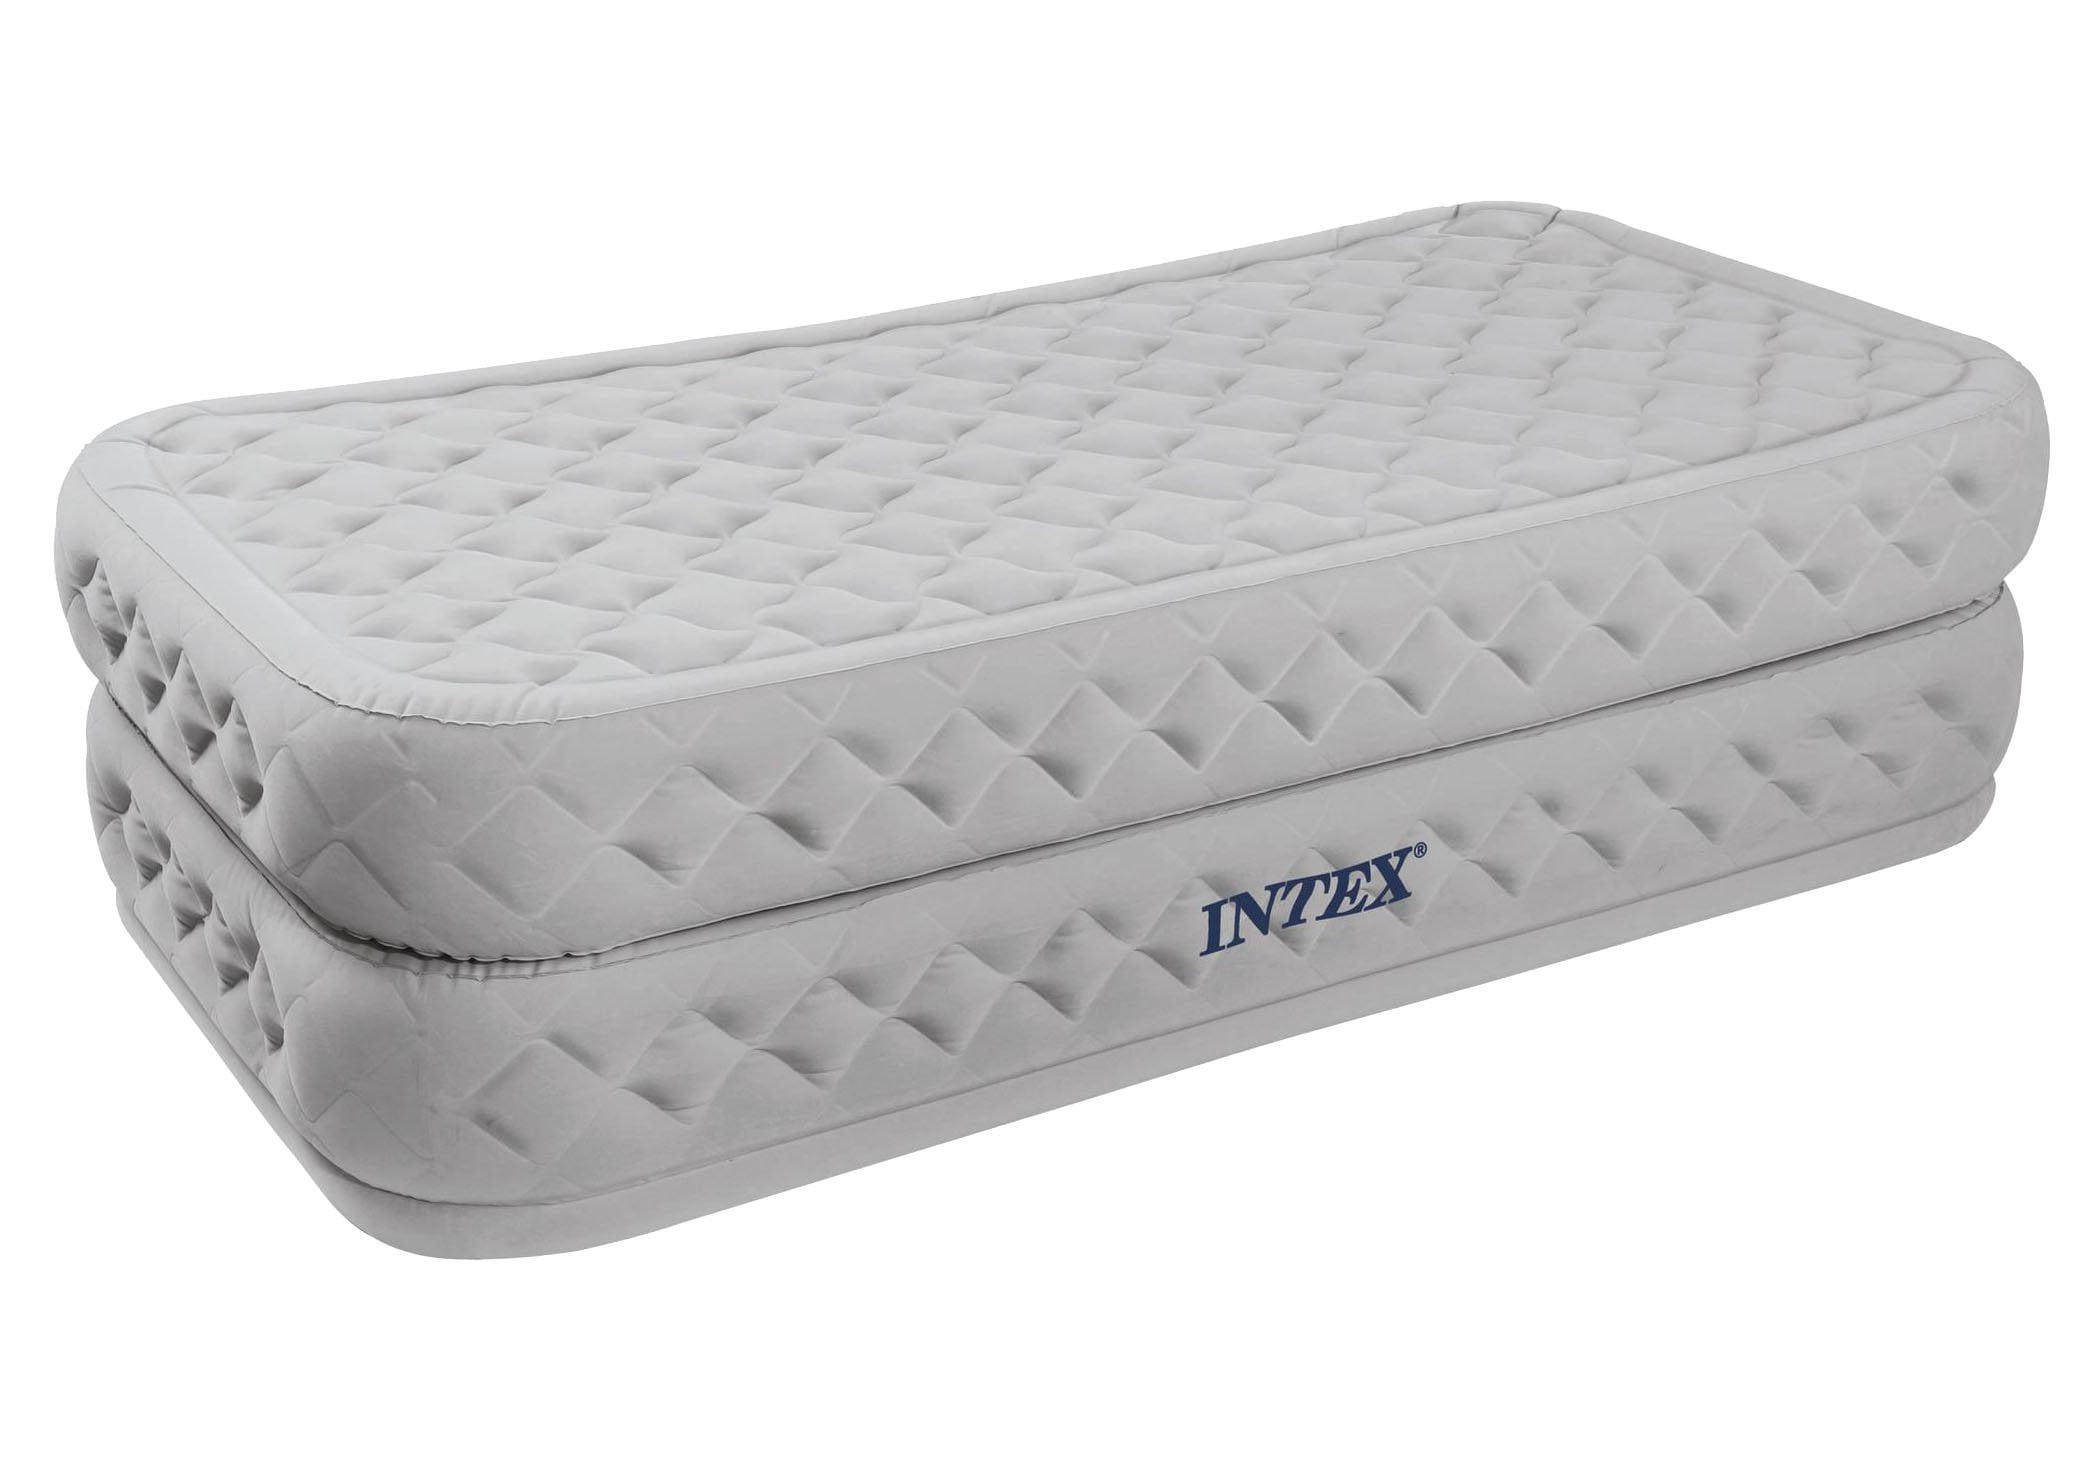 intex brand air mattress